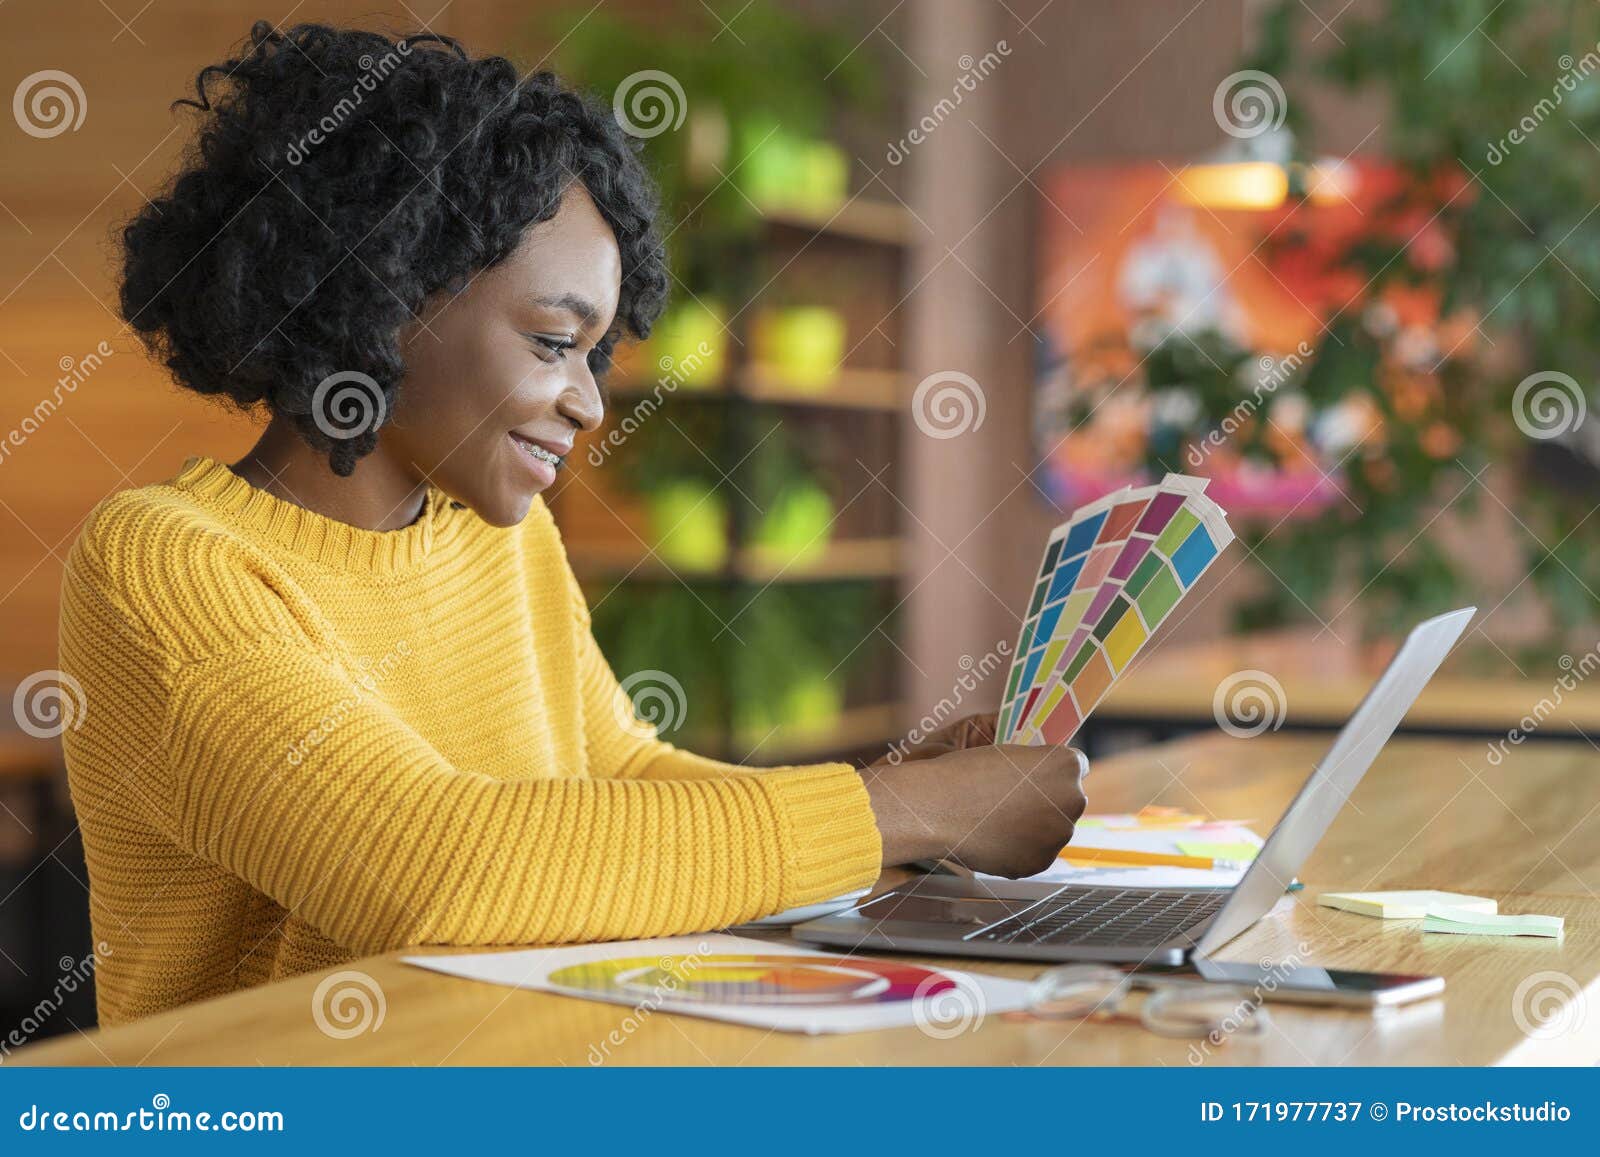 Black Woman Graphic Designer Working With Color Palette At Cafe Stock Image Image Of Entrepreneur Career 171977737,Blackmagic Design Video Assist Hdmi6g Sdi Recorder